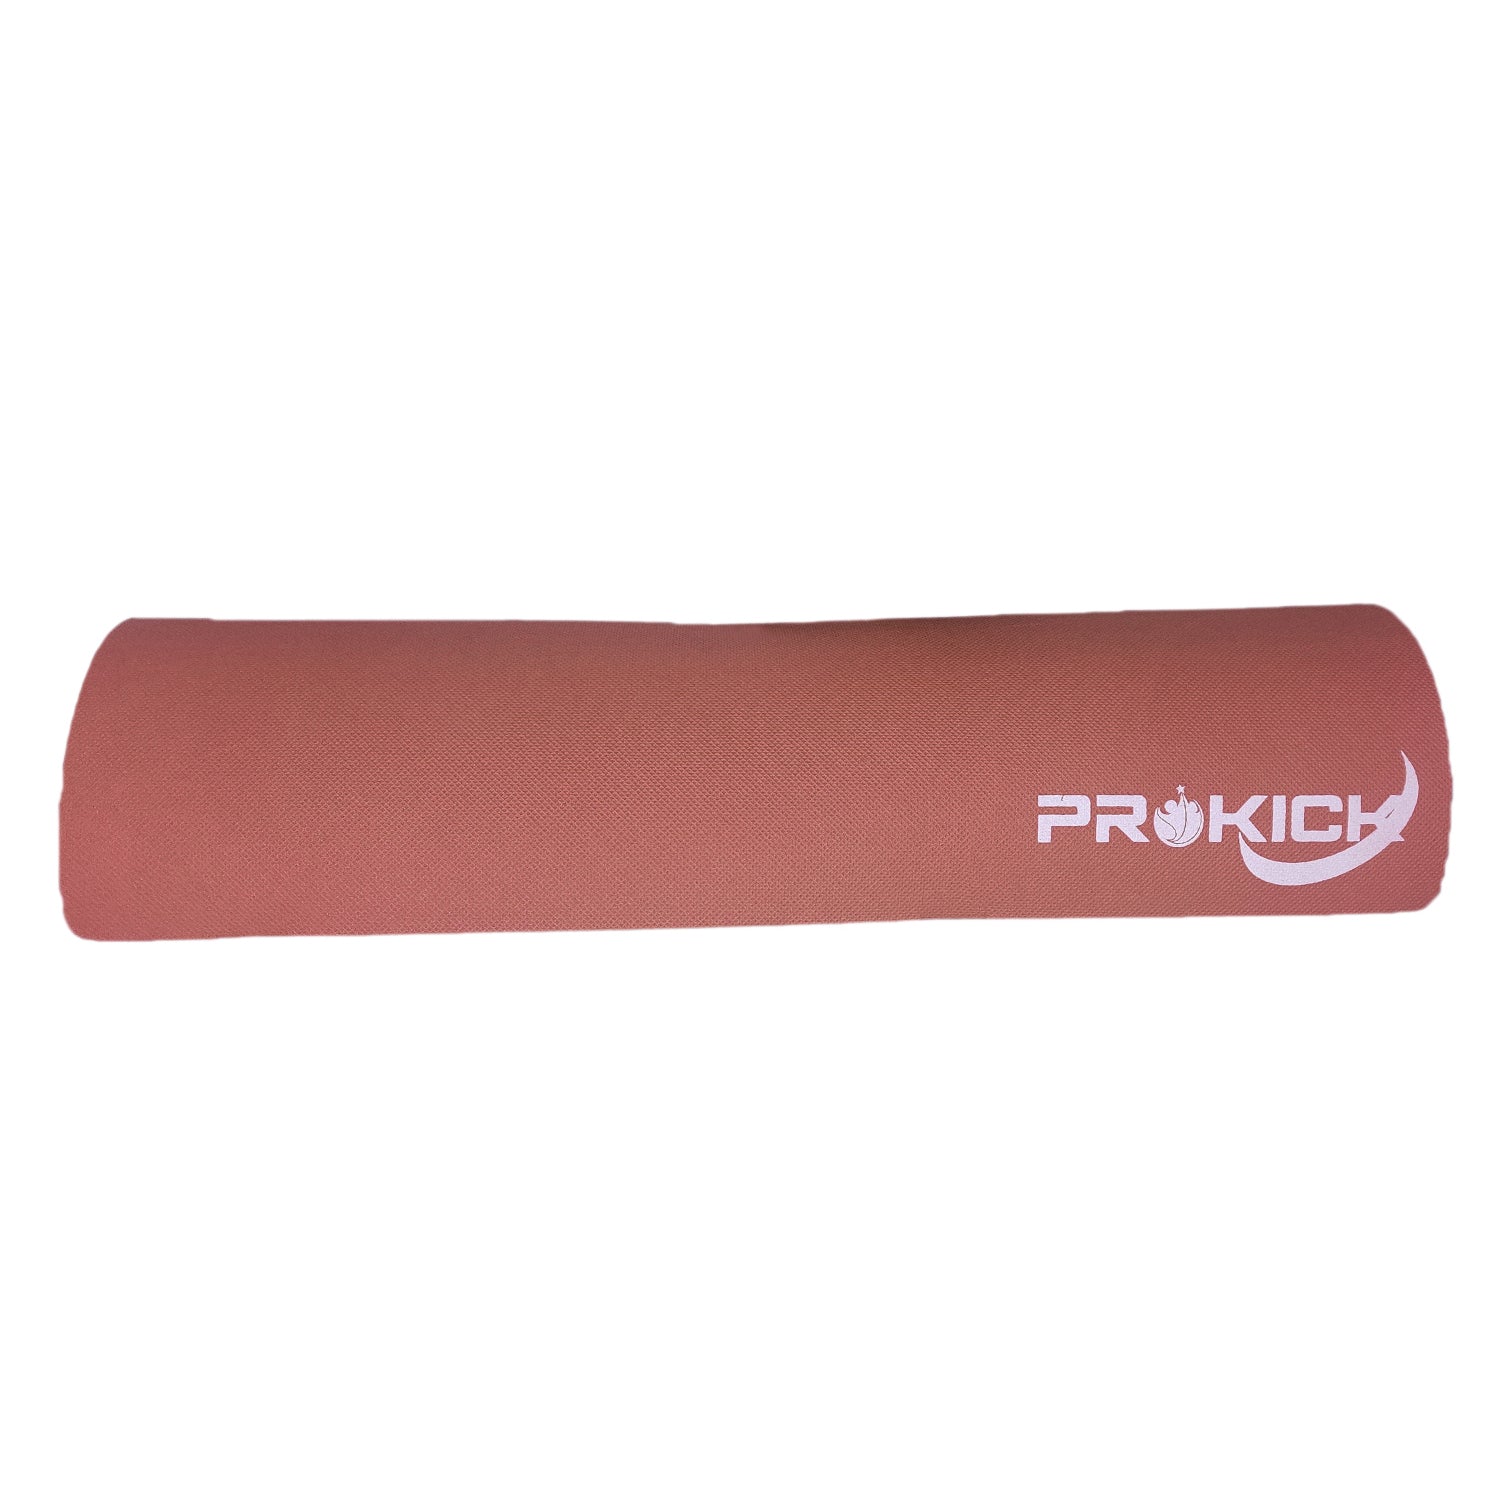 Buy online Bani Premium Anti Skid Eva Pink Yoga Mat-4mm from Rugs